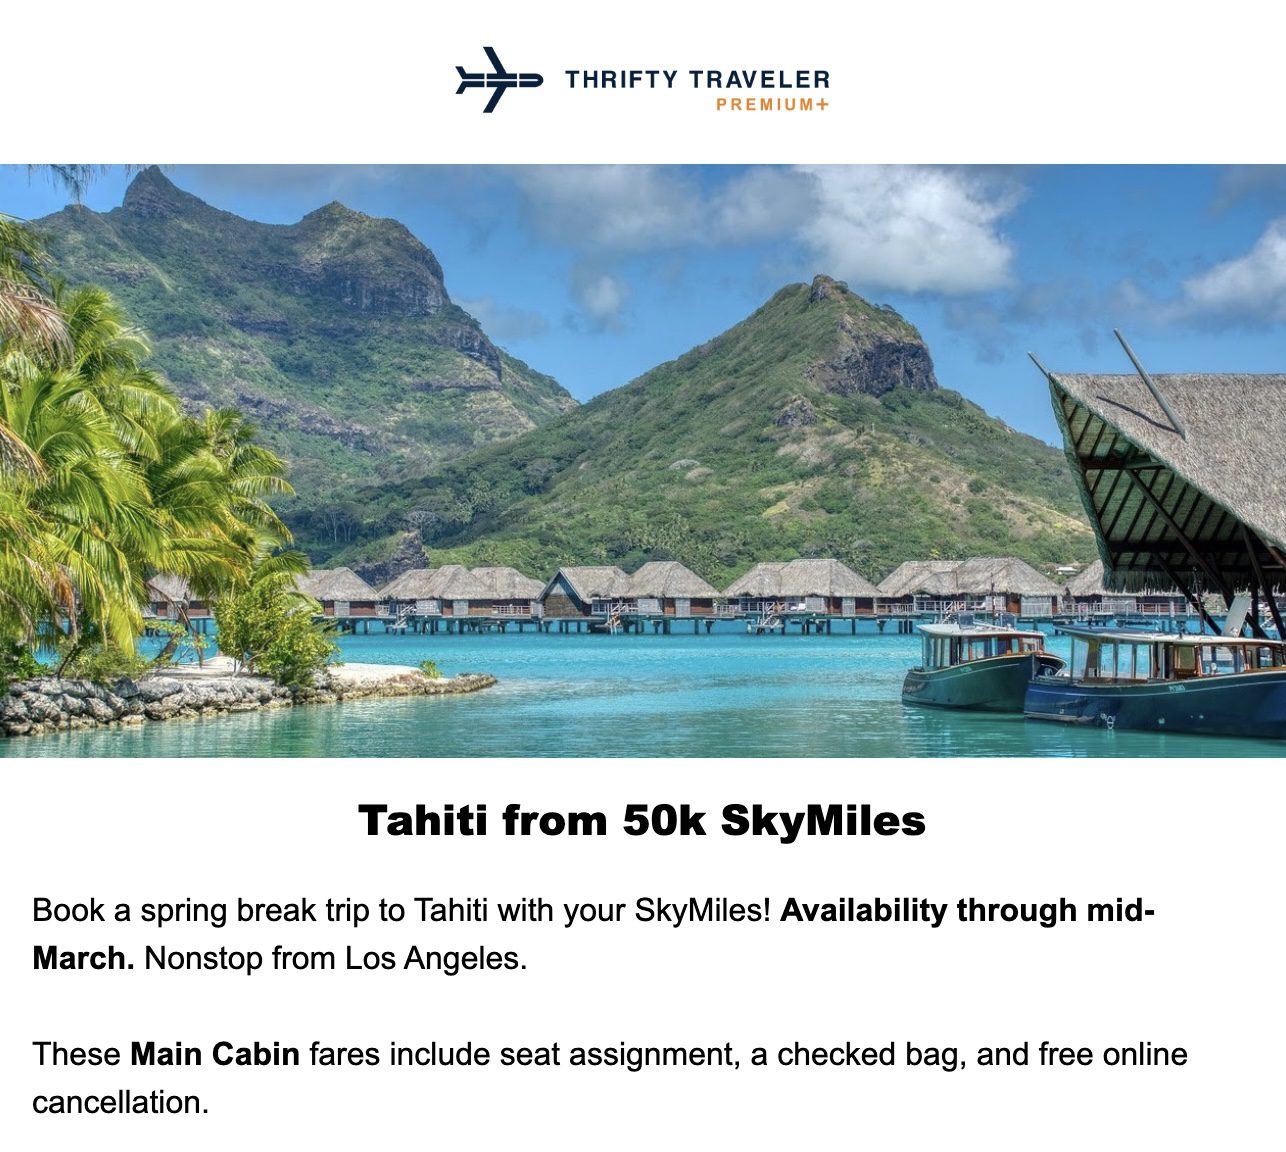 Delta SkyMiles flash sale to Tahiti